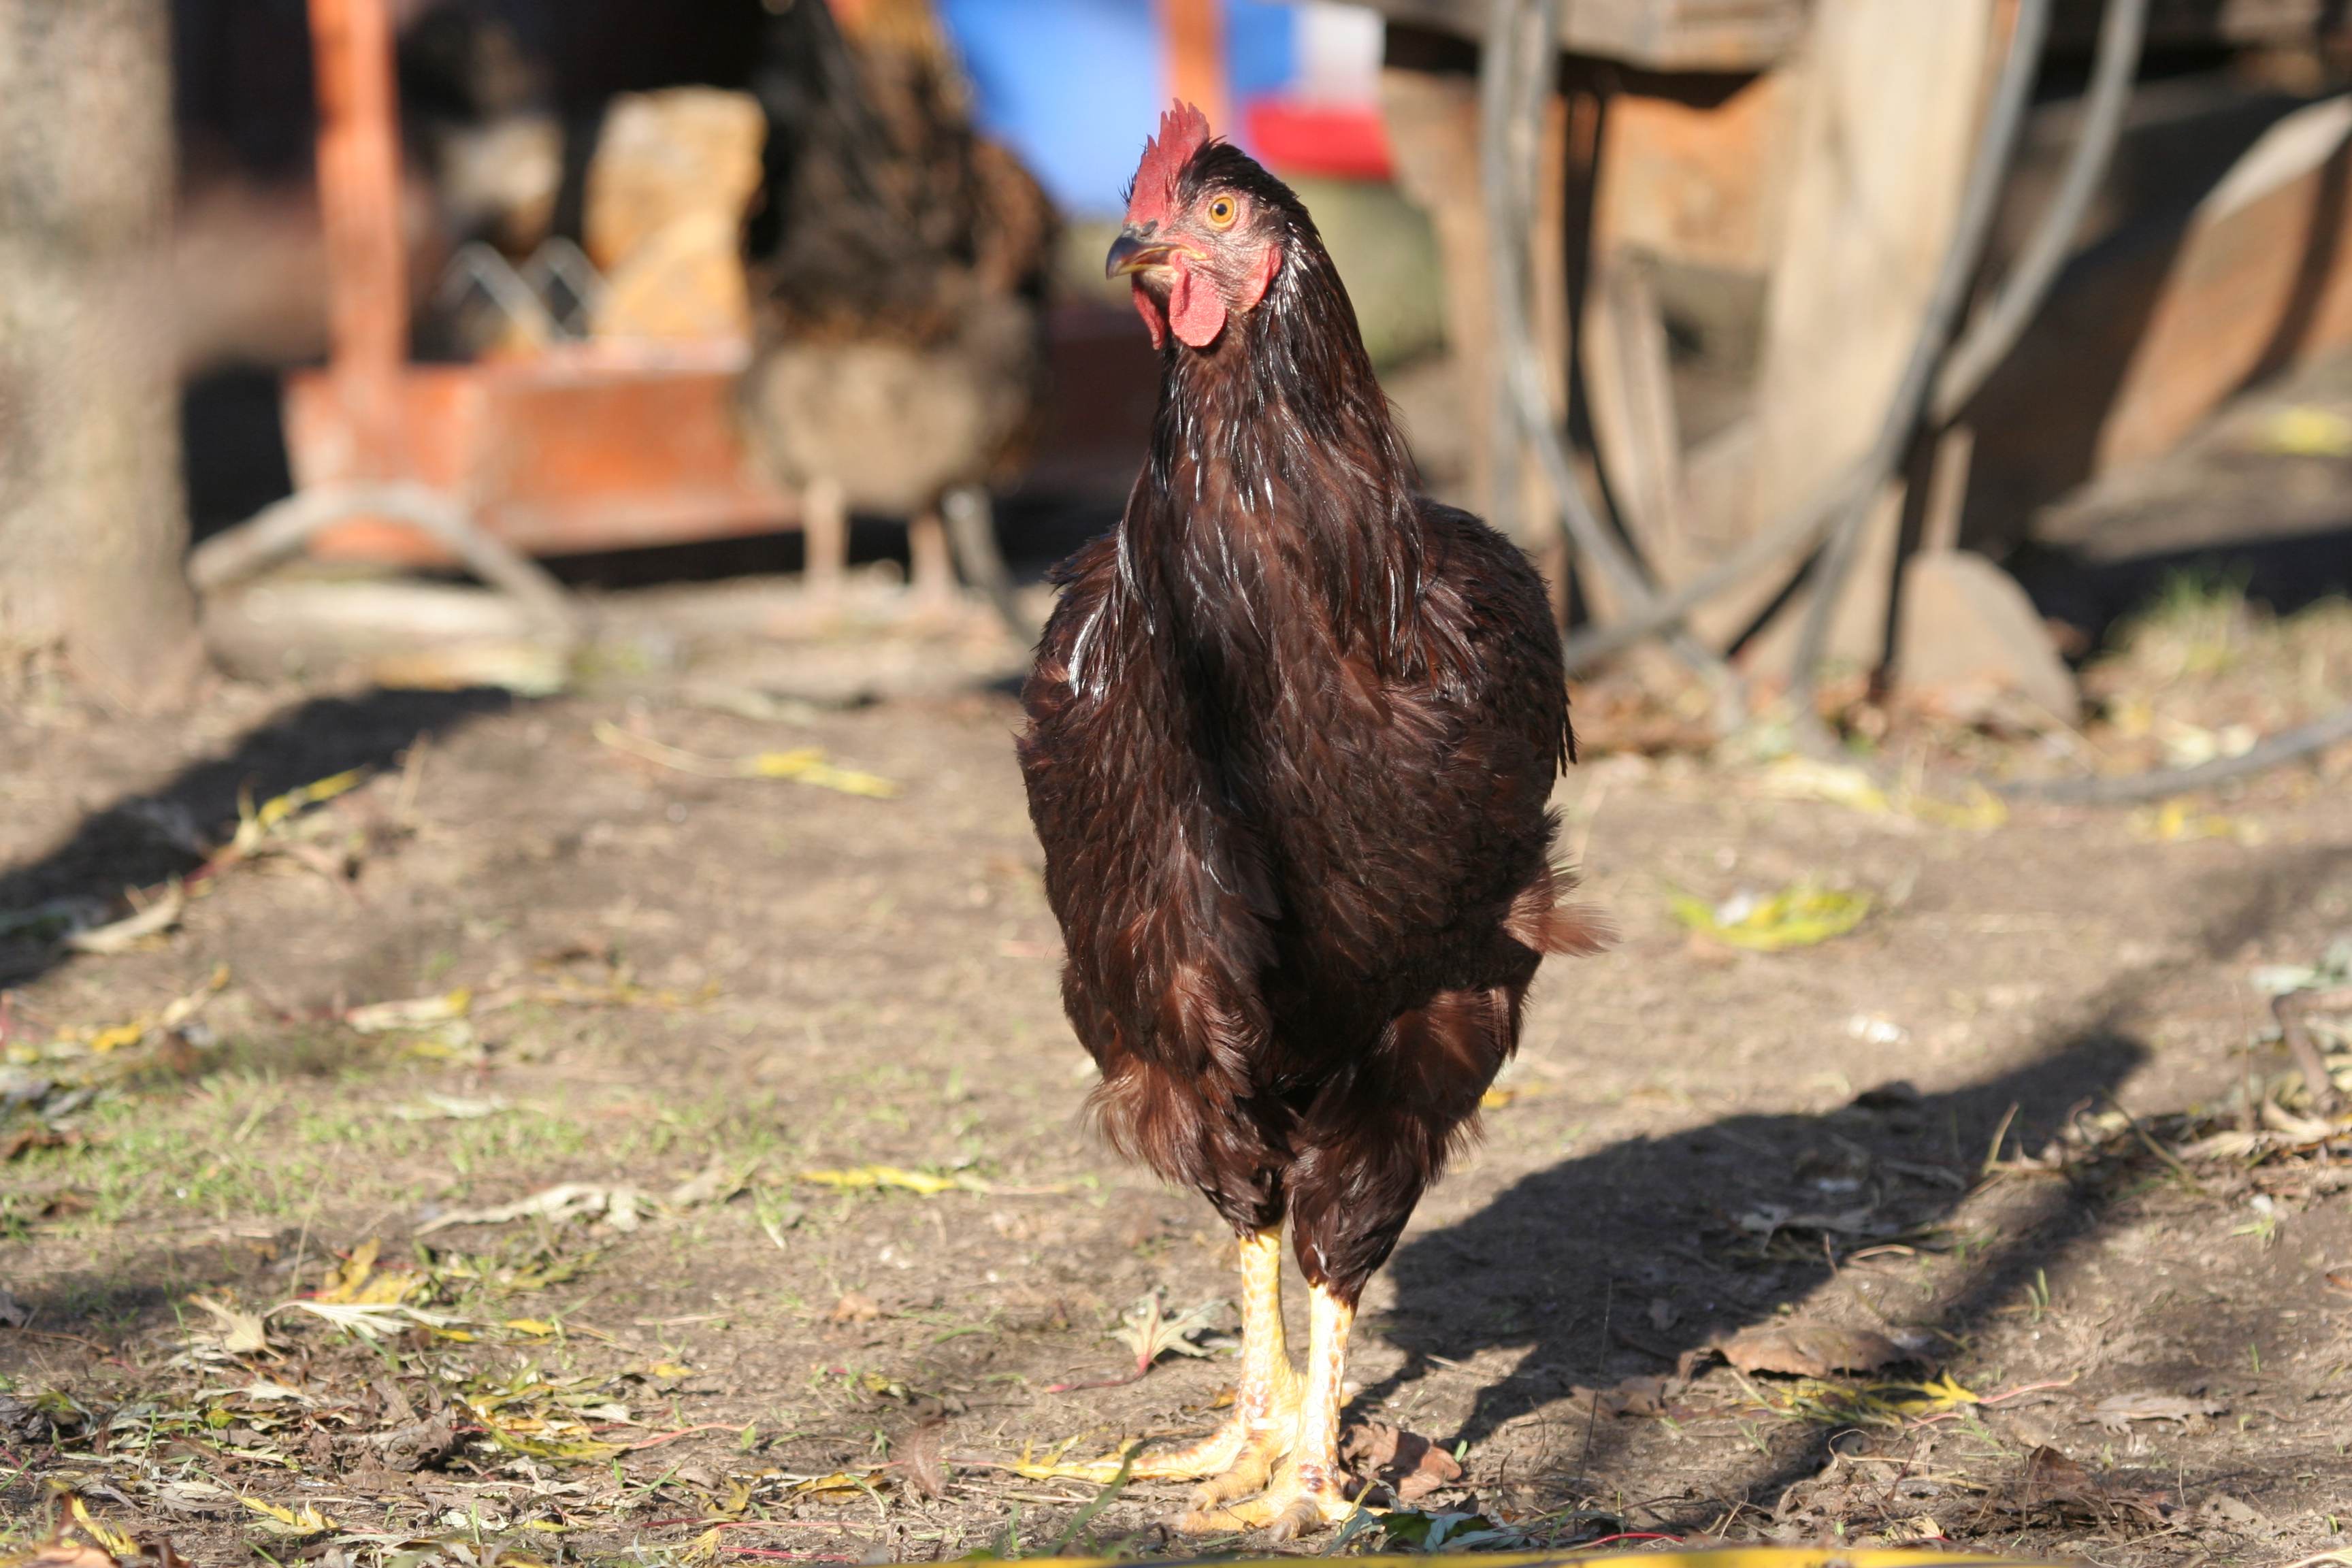 Род Айленд порода кур – описание П 11, фото и видео